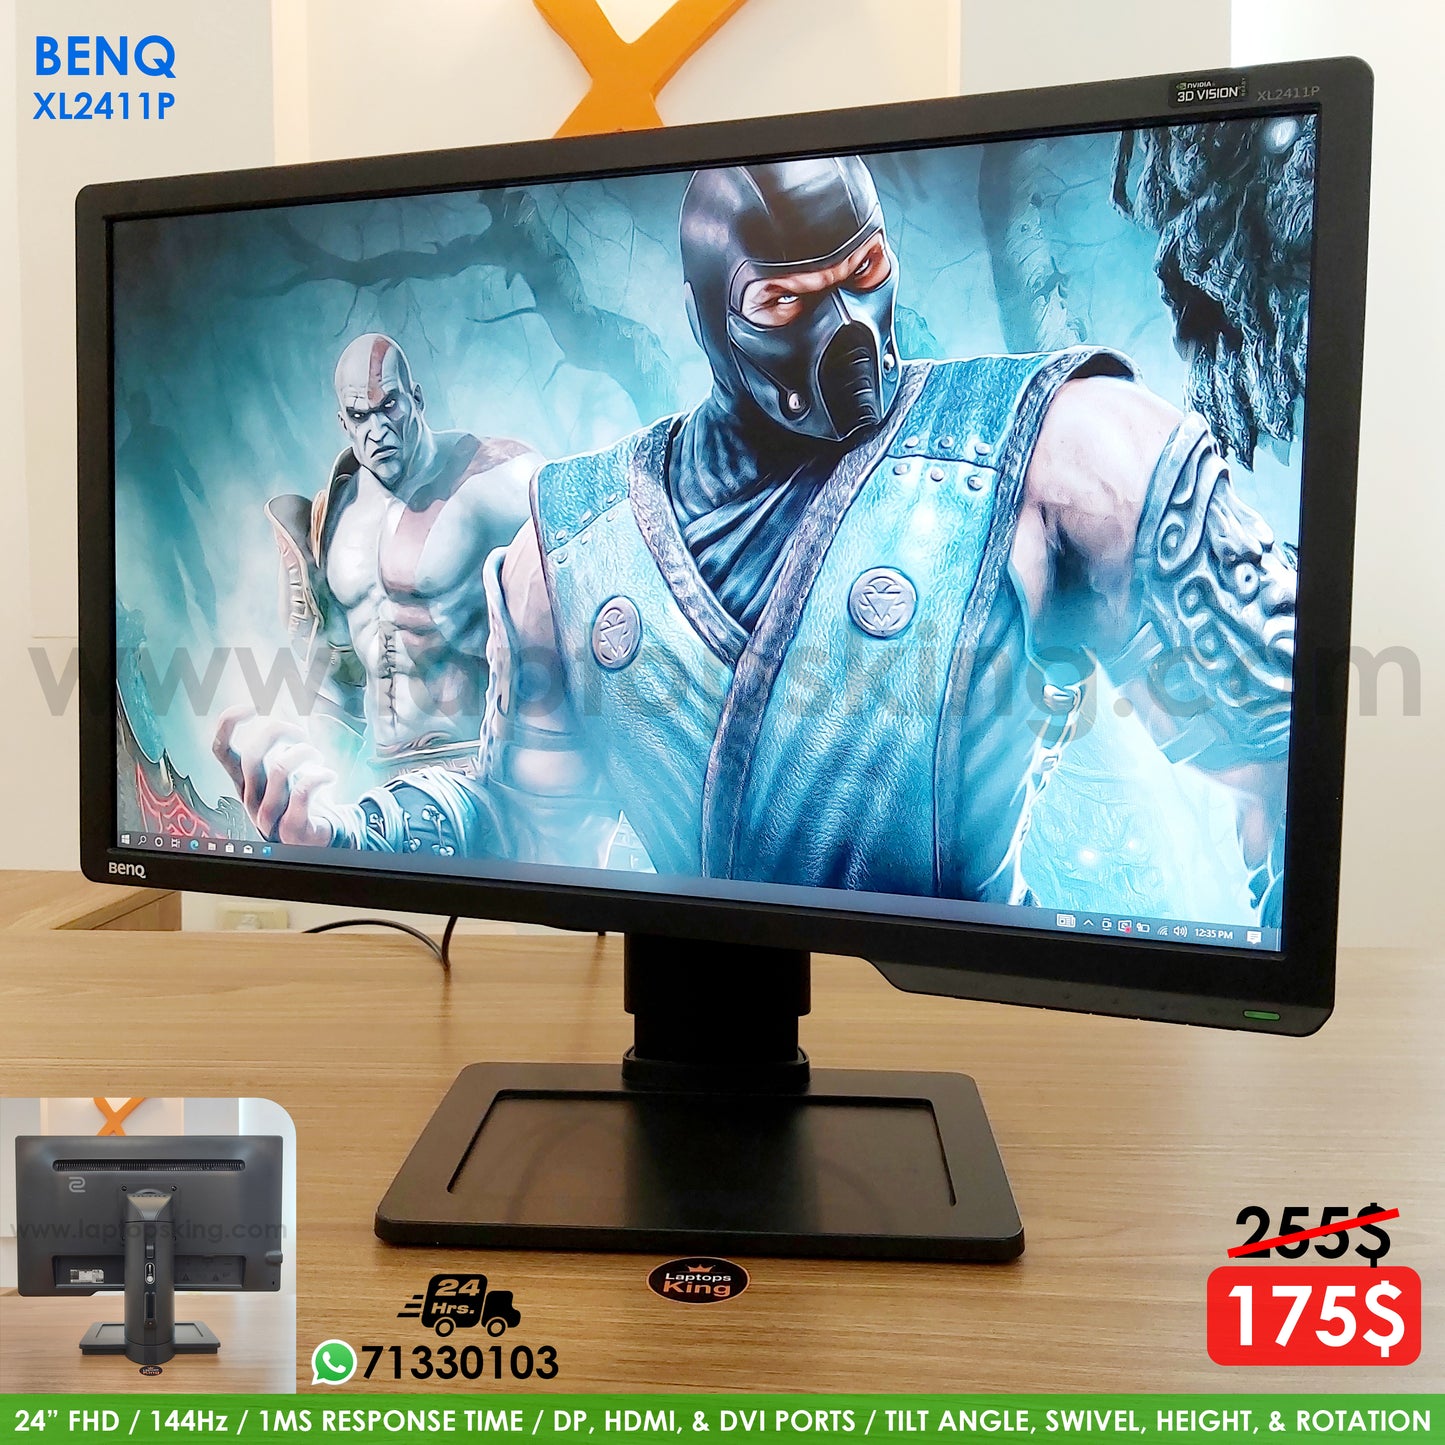 BenQ XL2411P 24" Fhd Gaming Monitor (Open Box)